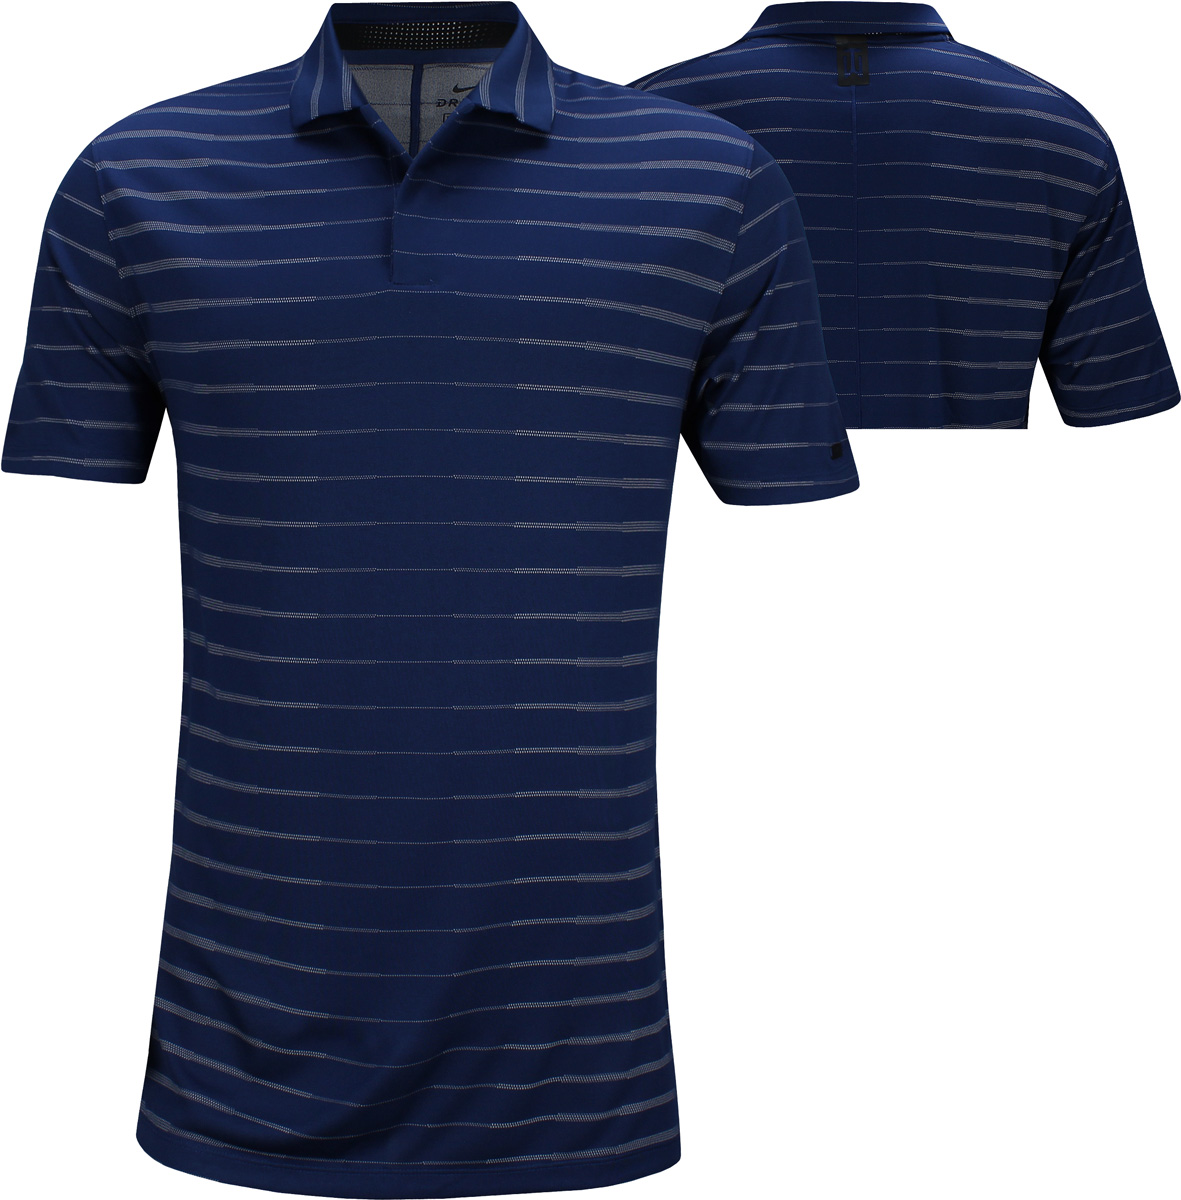 Nike Dri-FIT Tiger Woods Novelty Stripe Golf Shirts